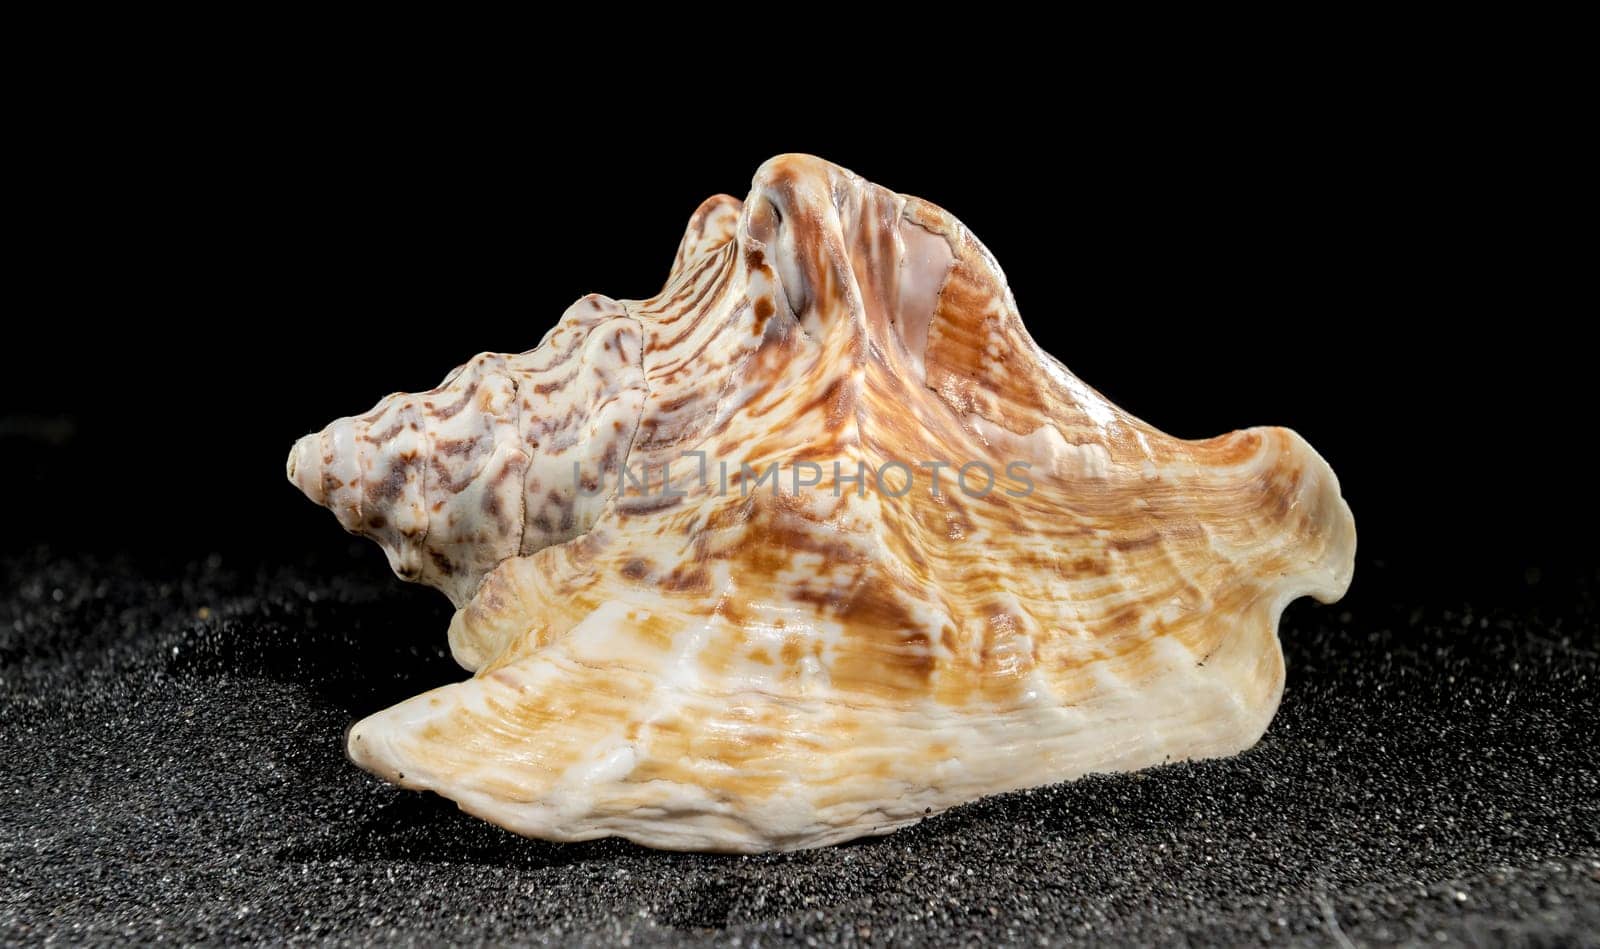 Strombus raninus seashell on a dark background by Multipedia